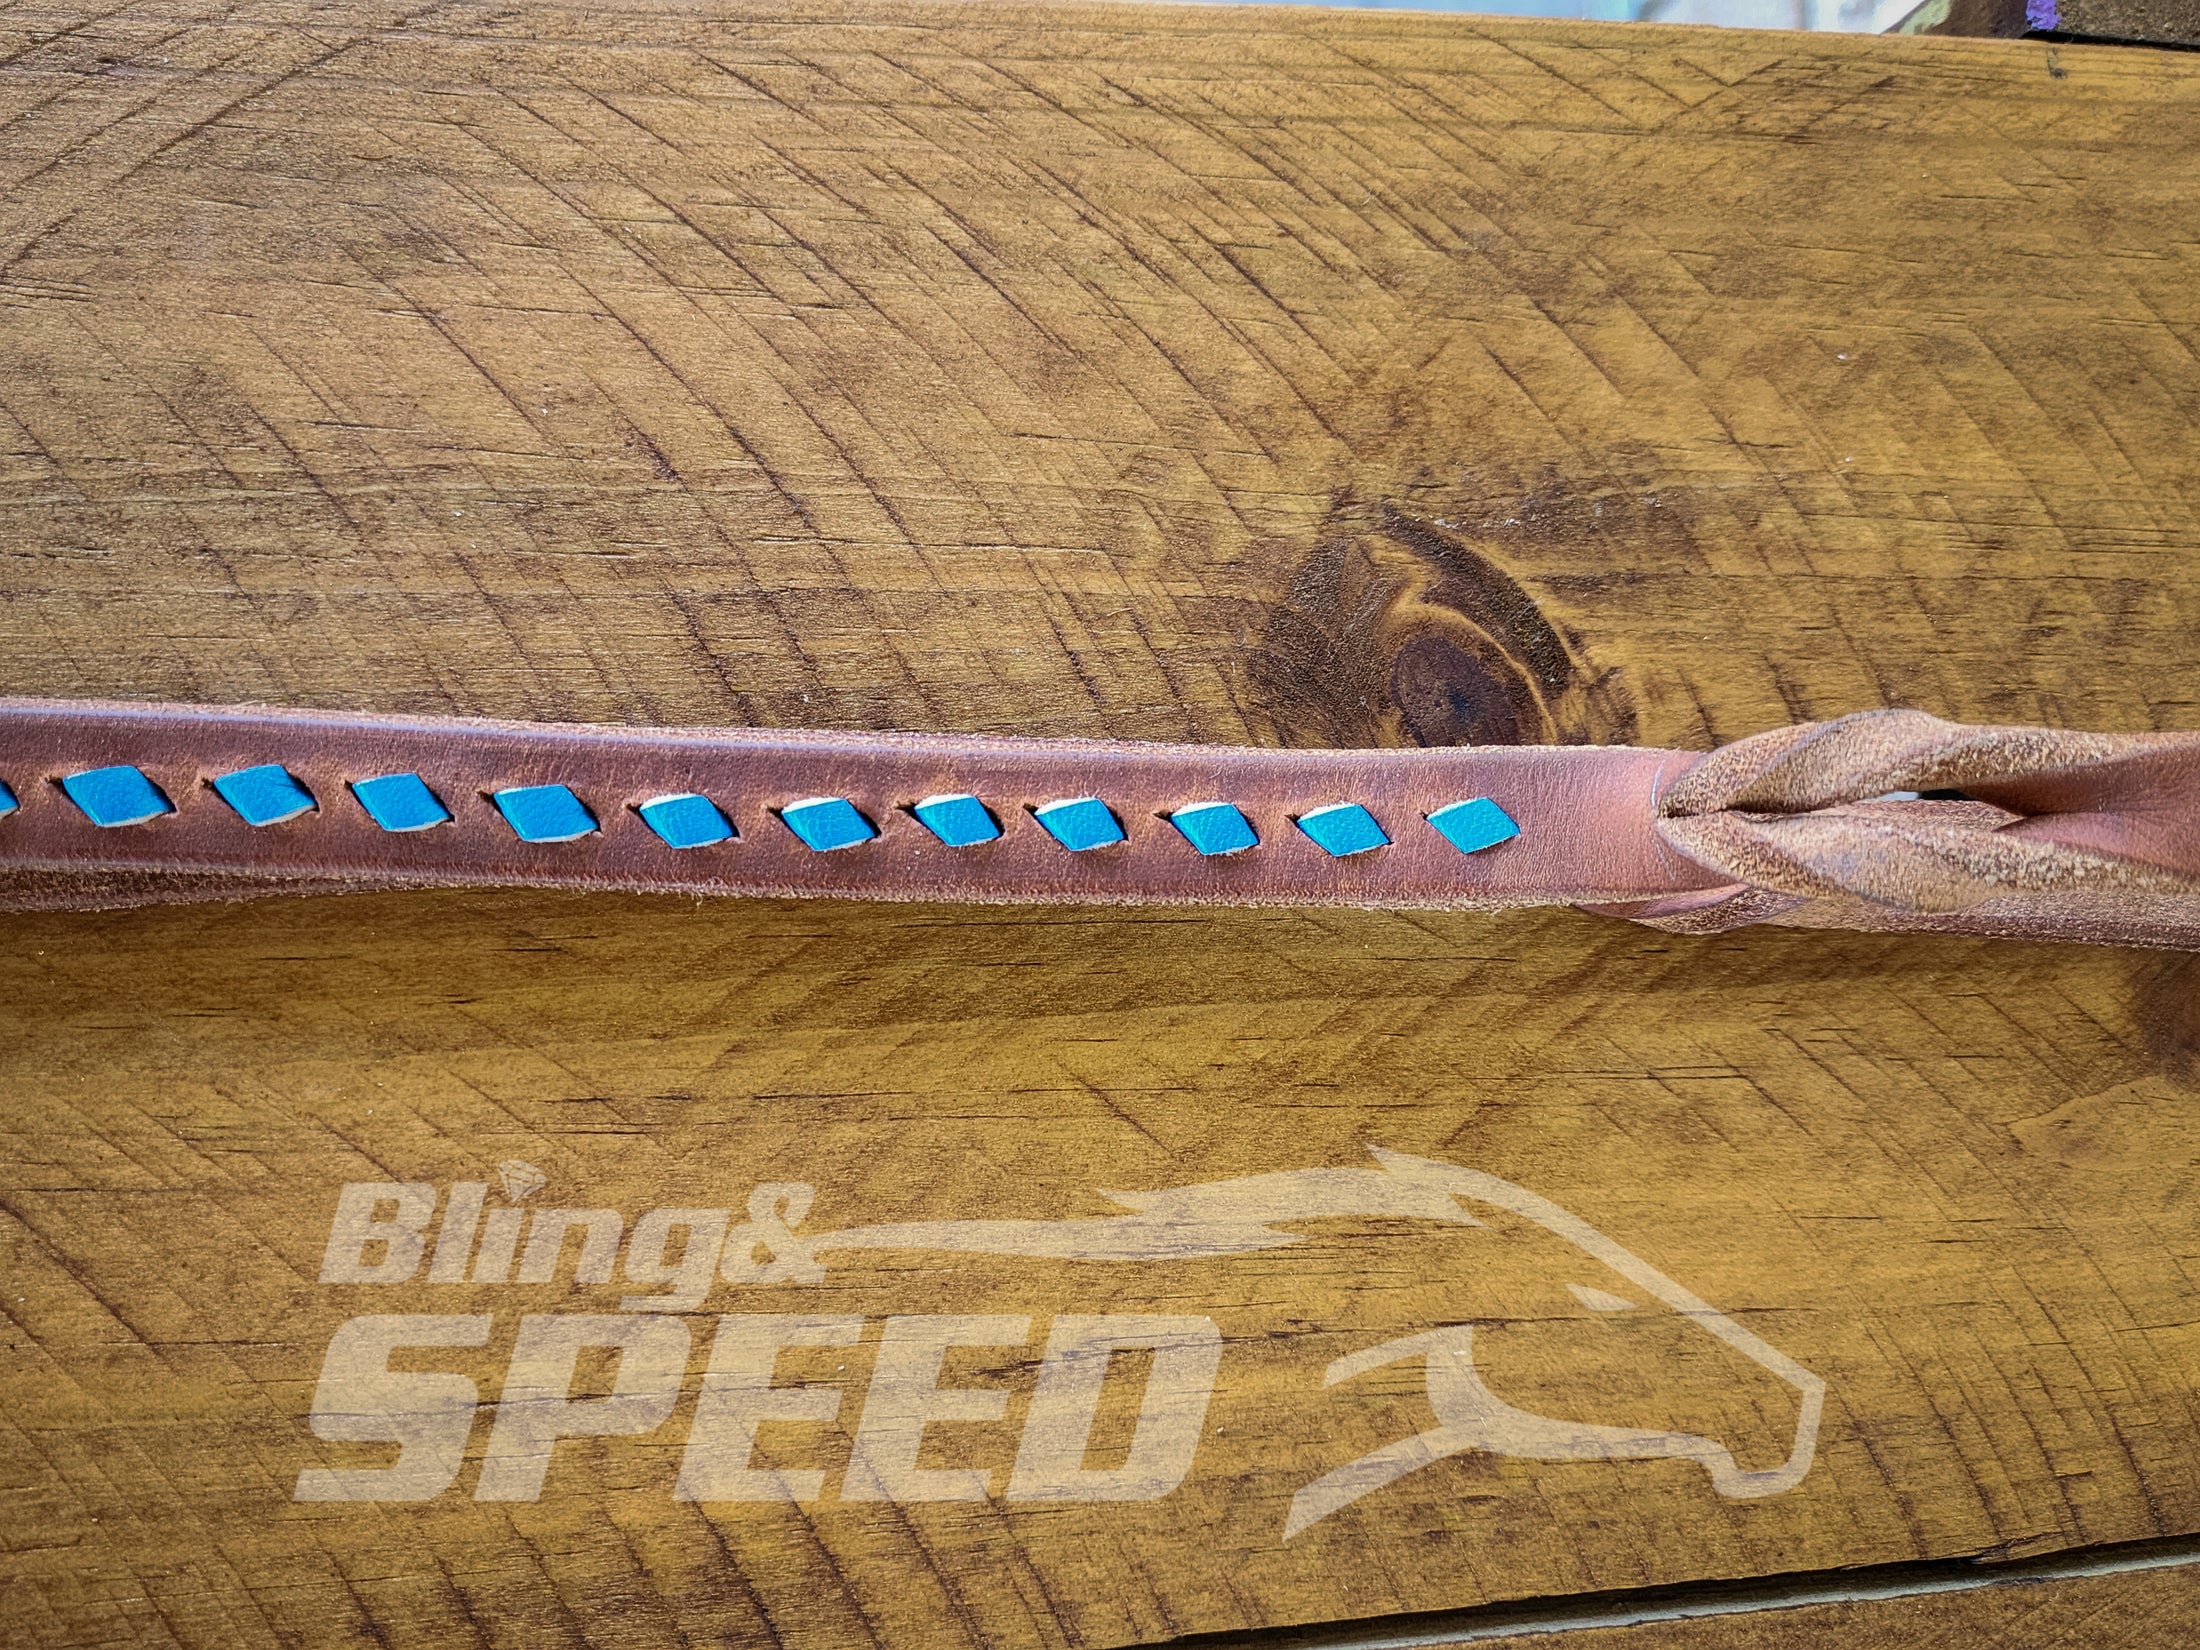 Bling & Speed Twisted Bloodknot Buckstitched Barrel Reins - Blue (7977756033262)